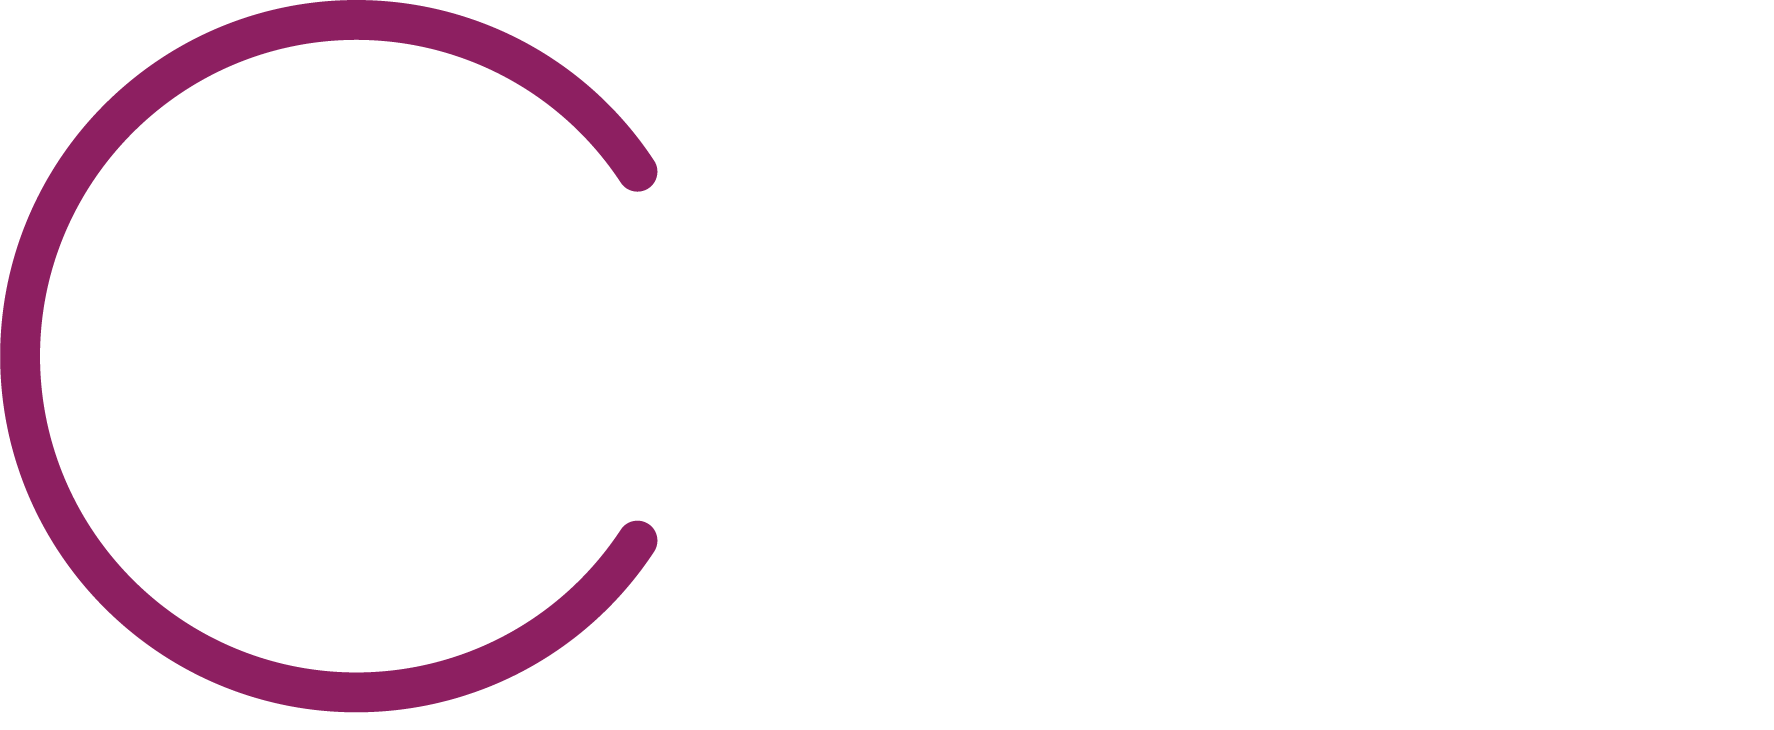 Evident Vascular, Inc.